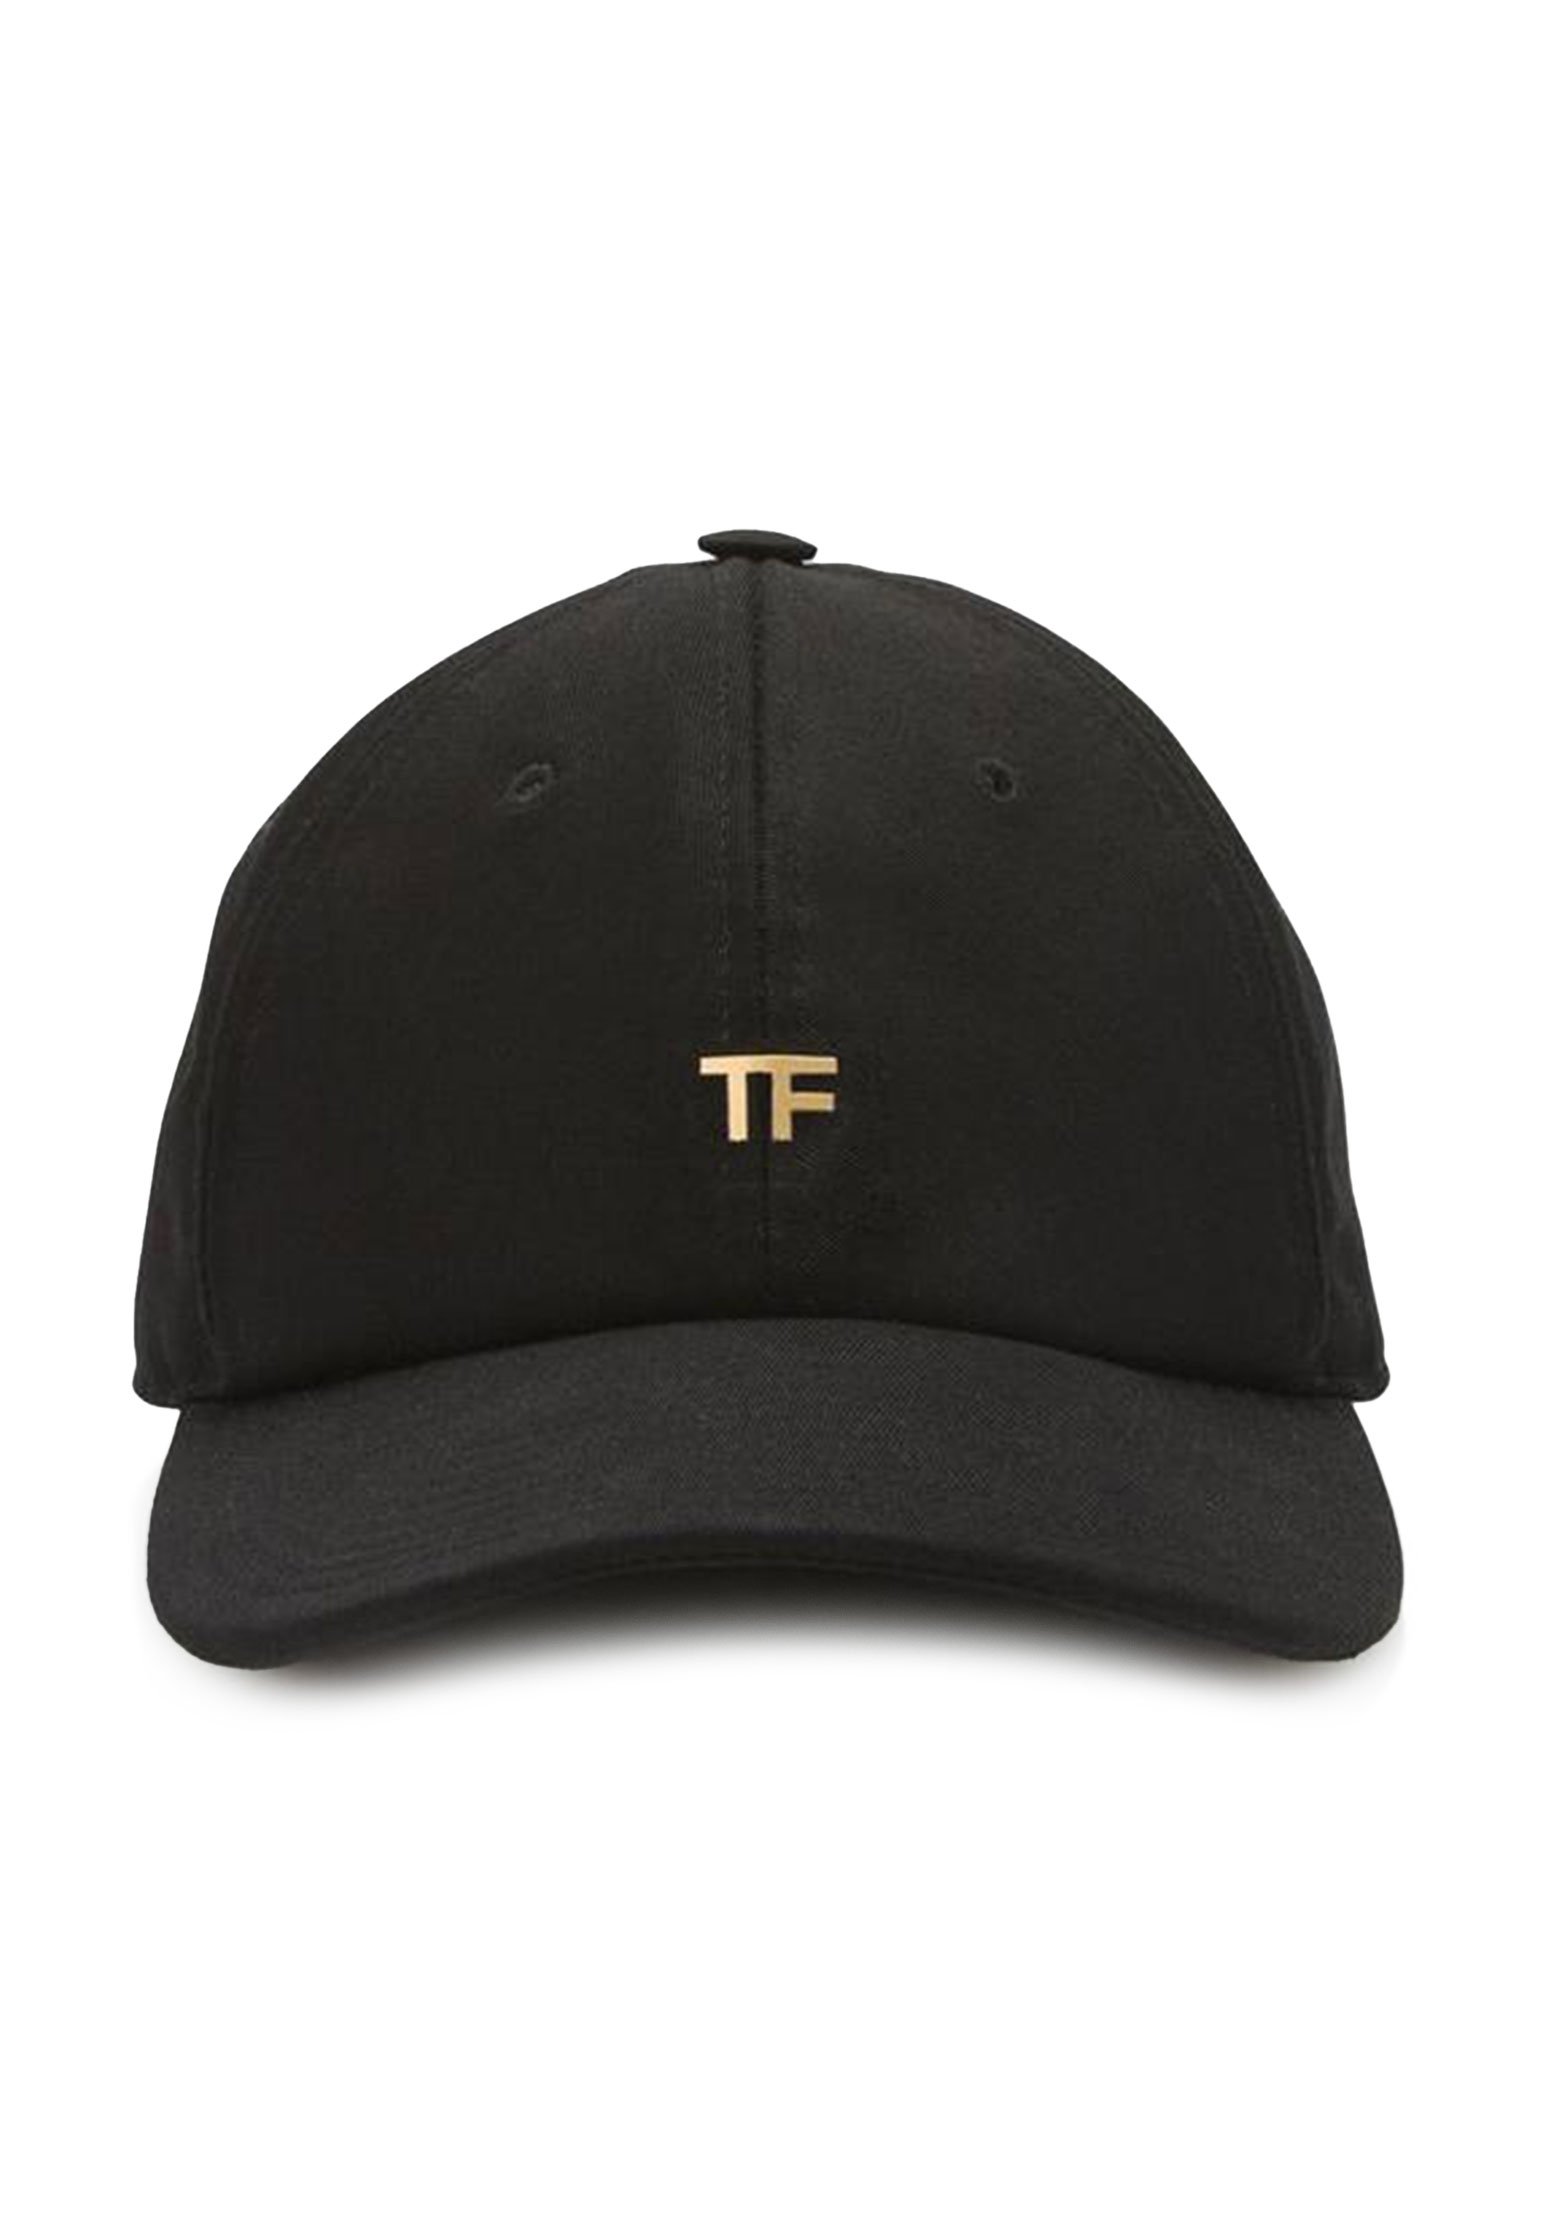 Cap TOM FORD Color: black (Code: 2992) in online store Allure